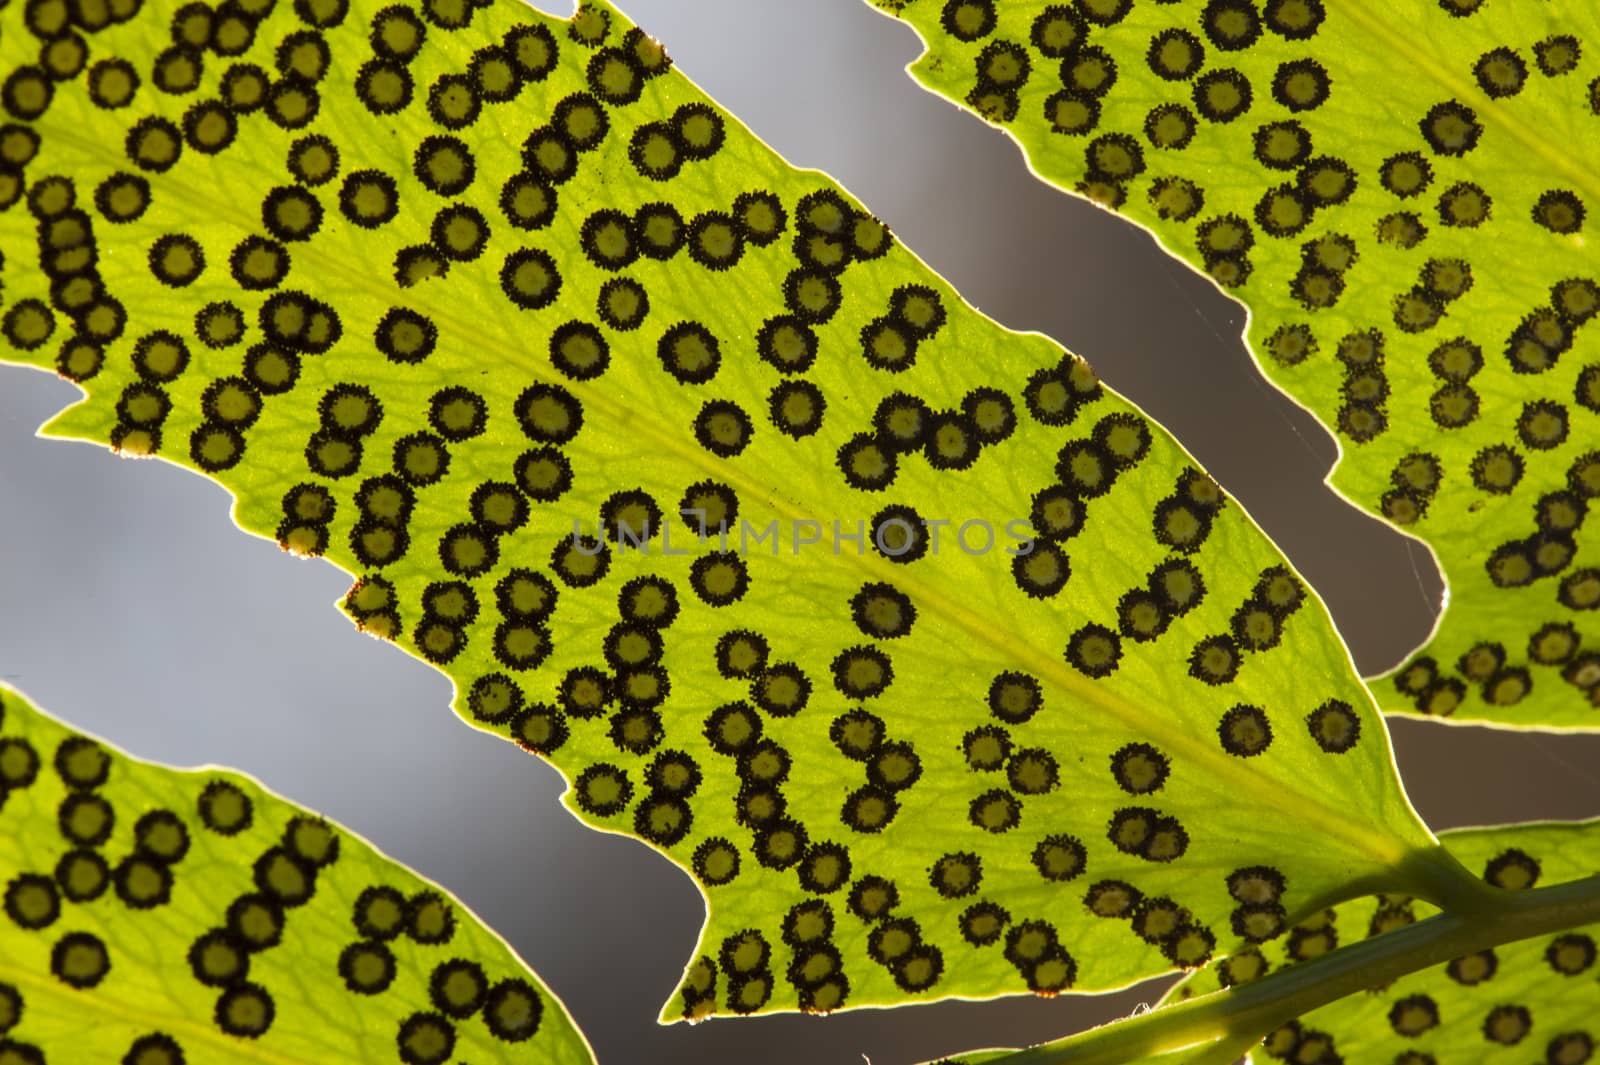 Fern spores on leaf. by AlessandroZocc